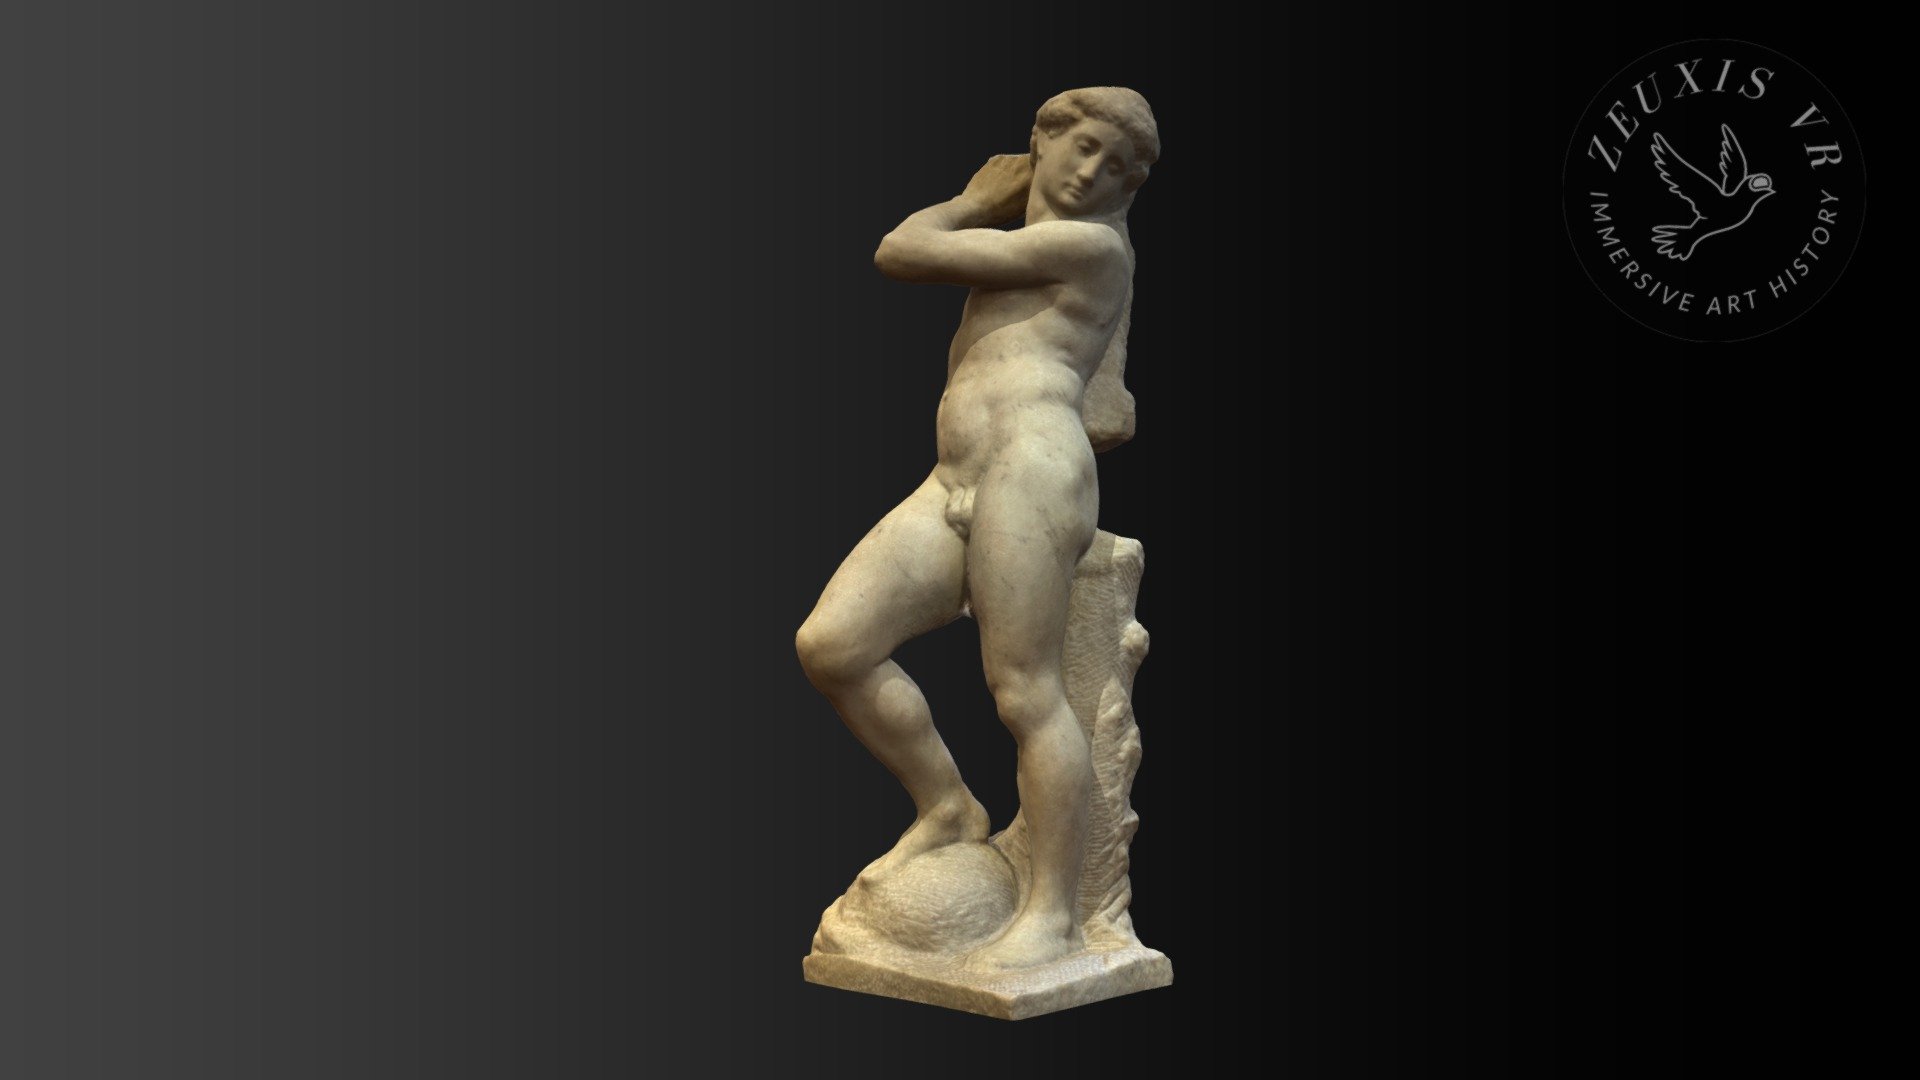 Michelangelo Buonarroti, Apollo/David, 1530, marble, 146cm., Bargello Museum, Florence.
Phone scan using Metascan 3d model